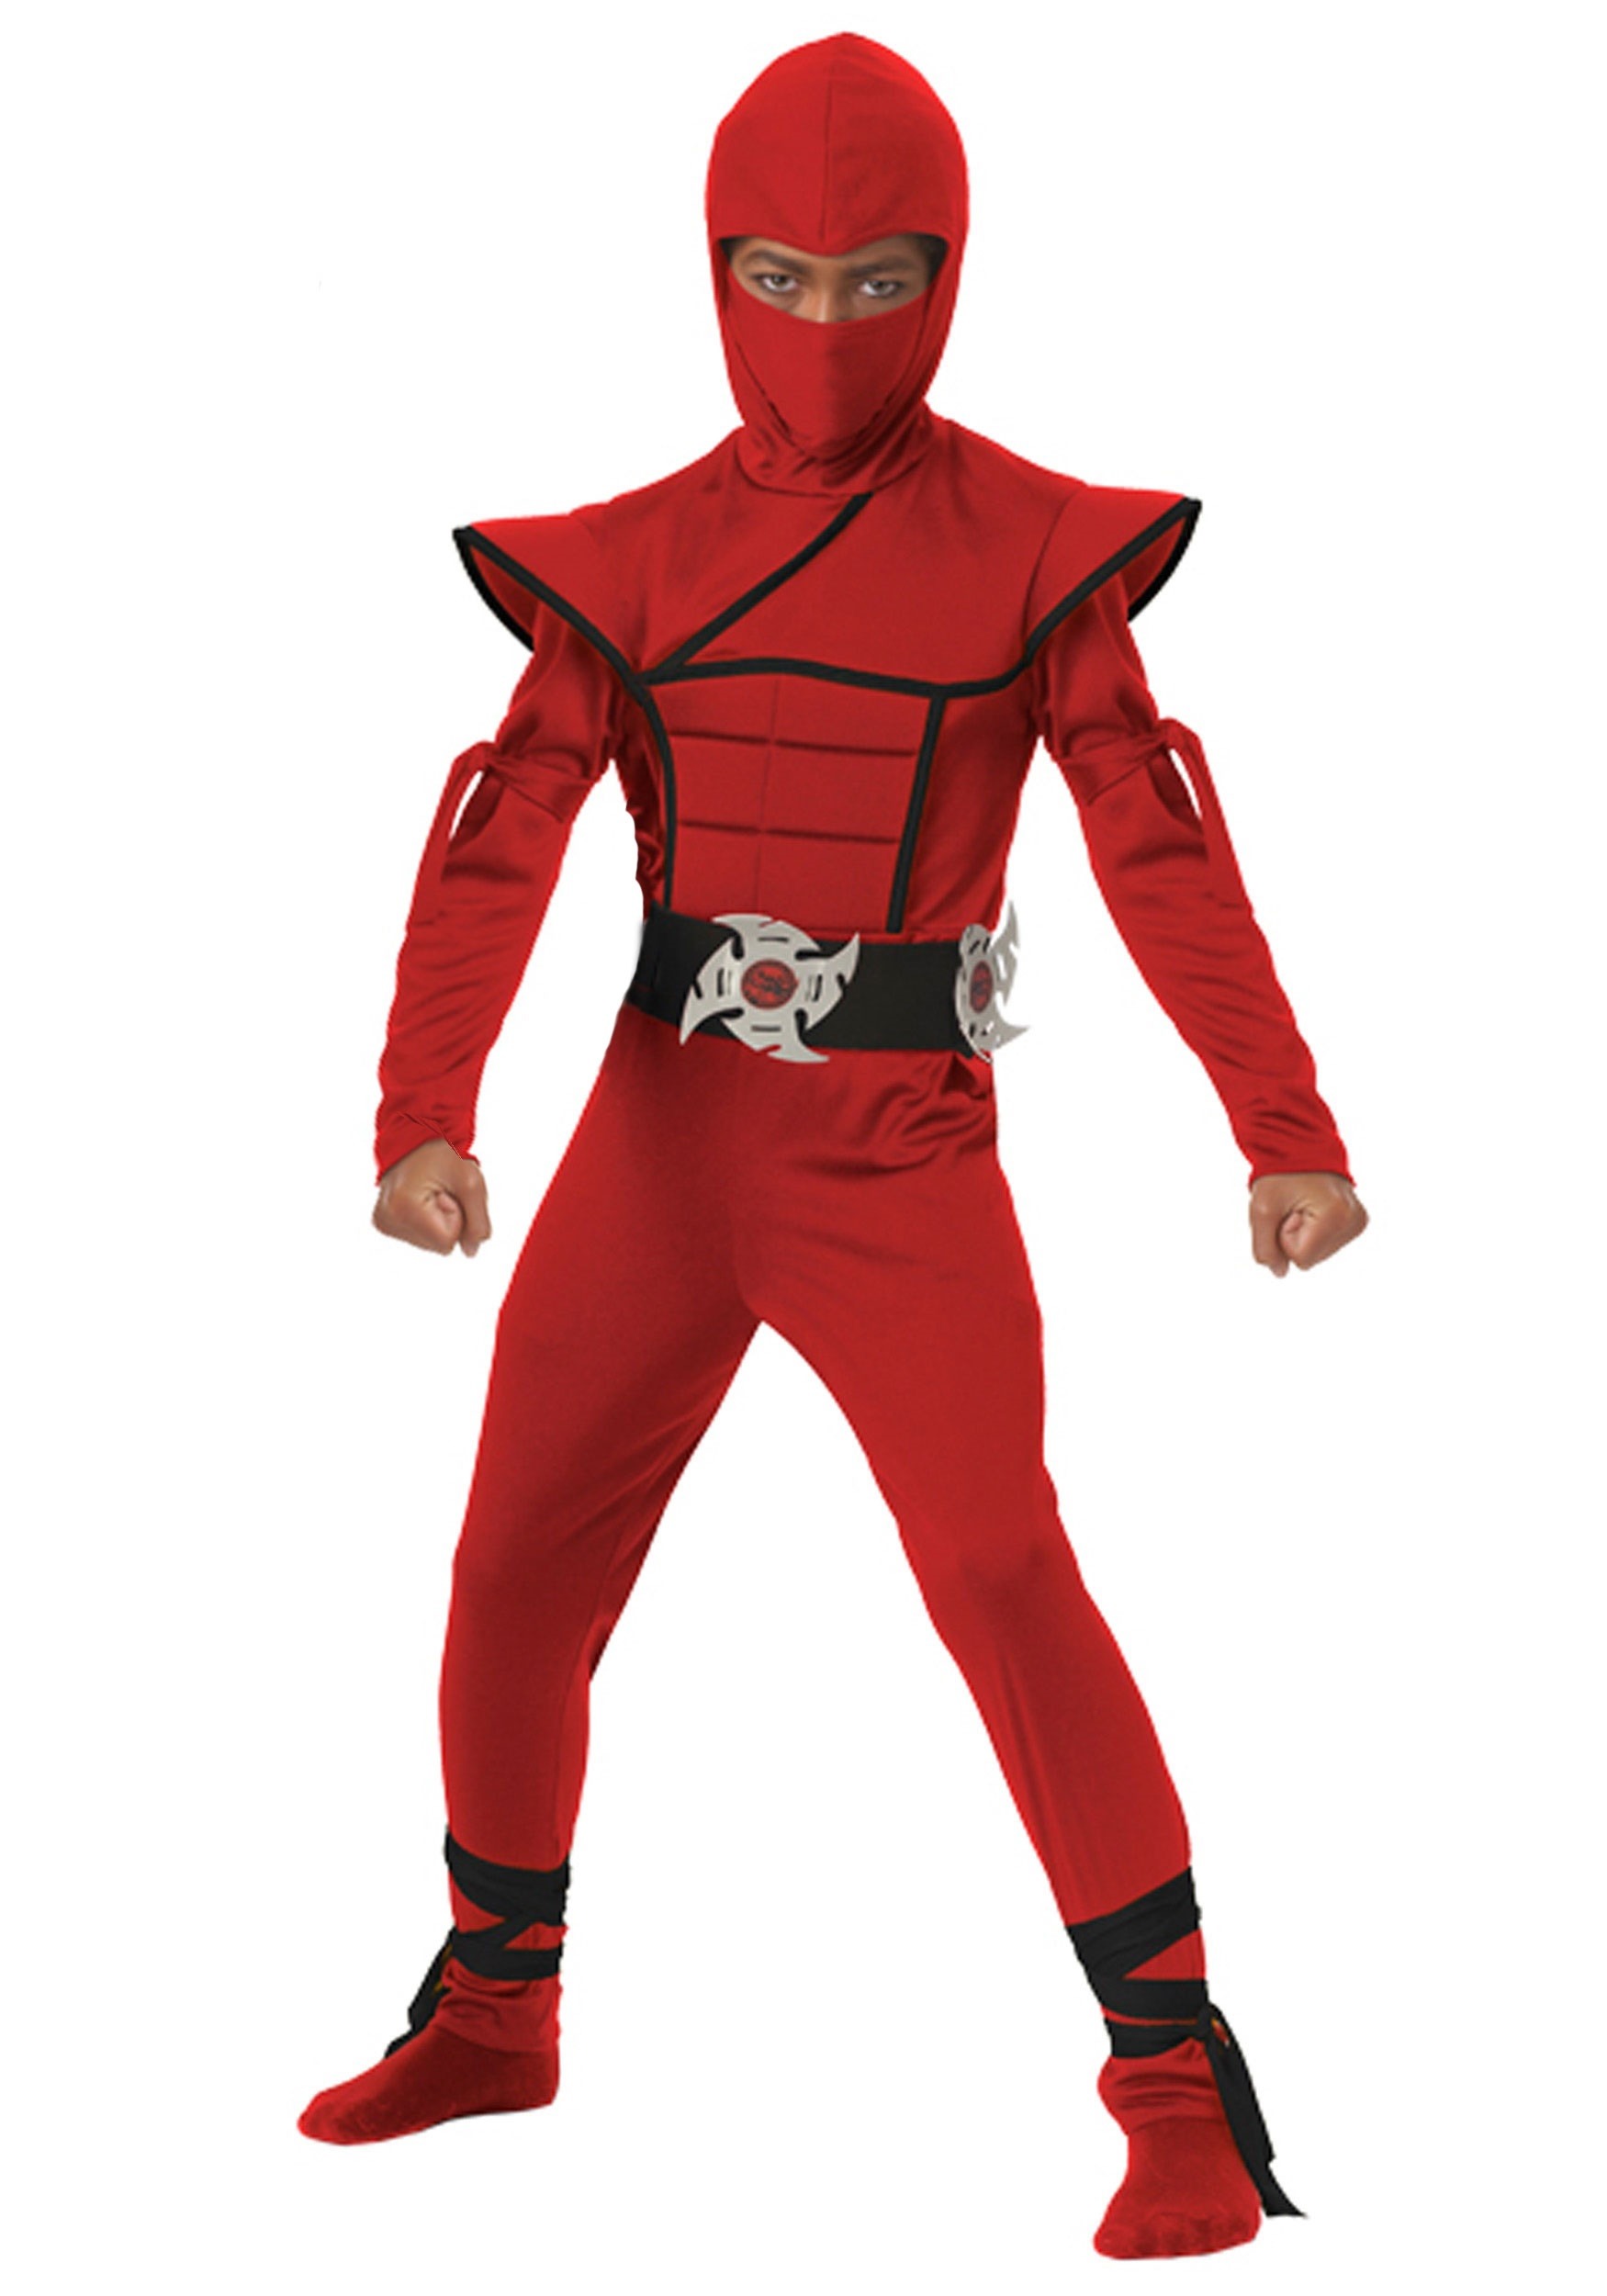 Boys Red Ninja Halloween Costume